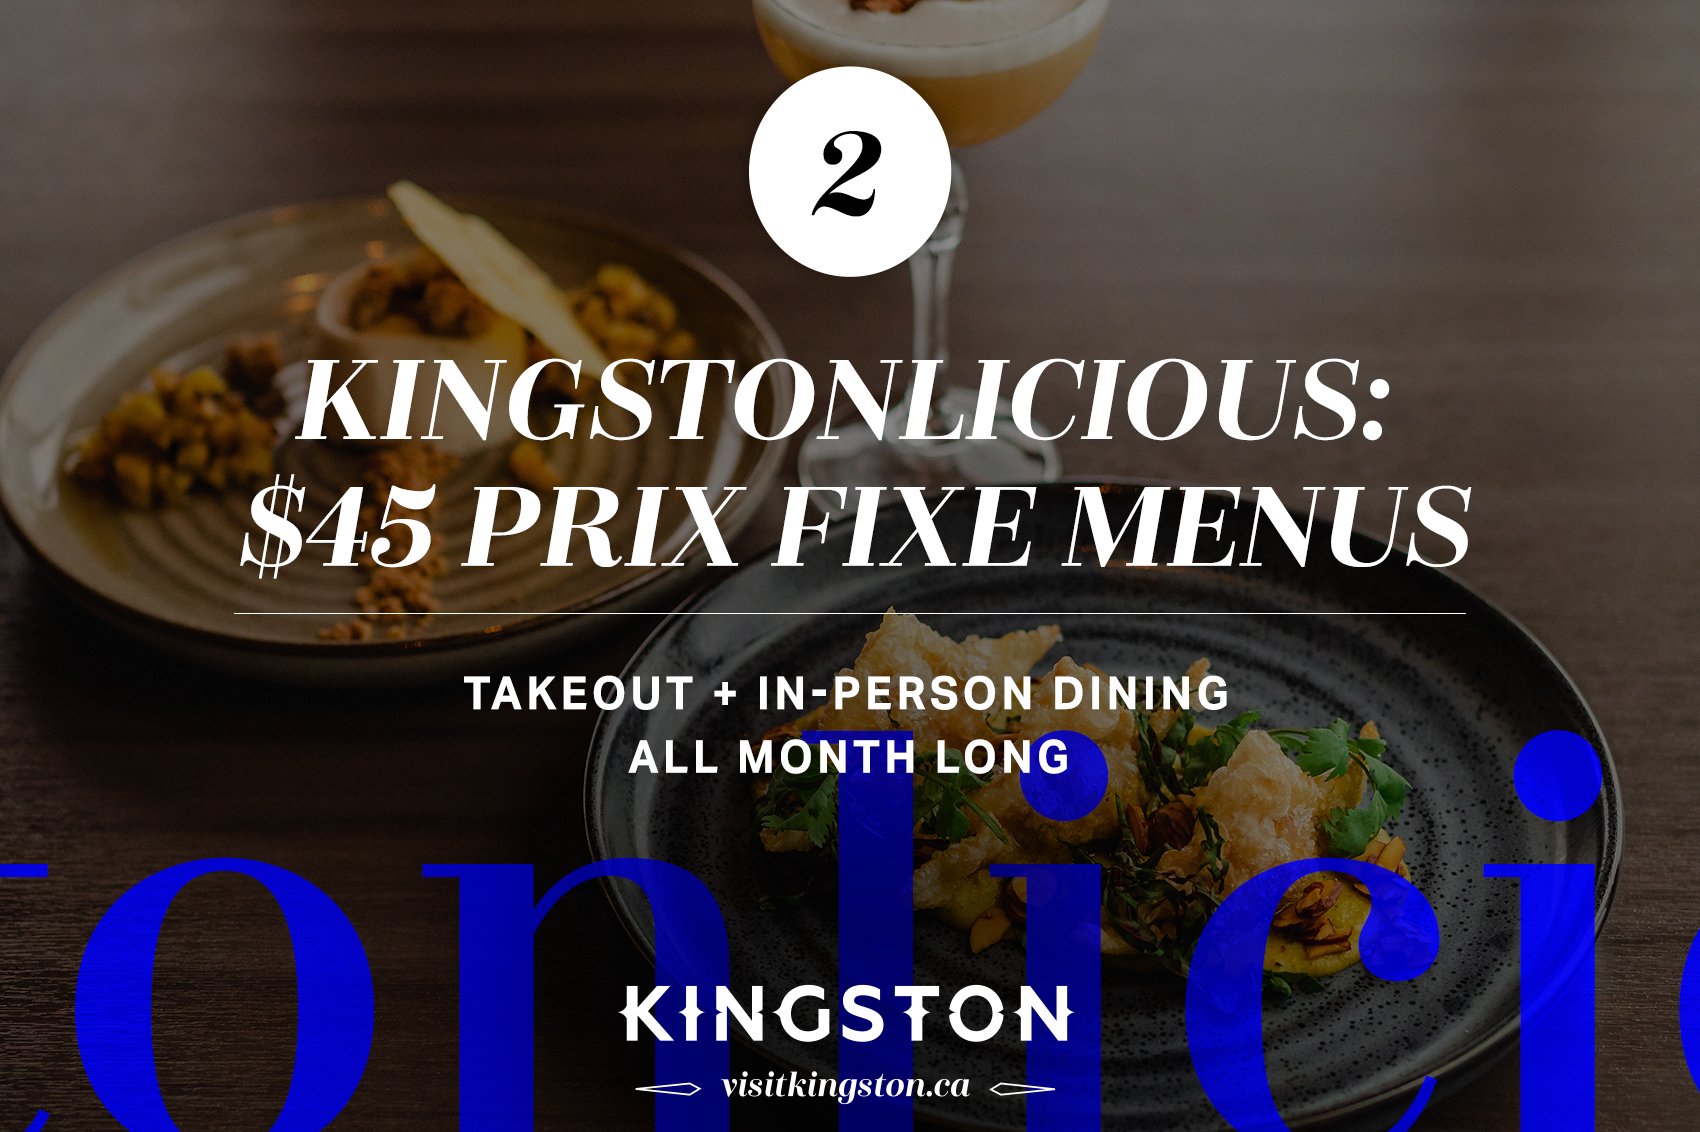 Kingstonlicious: $45 prix fixe menus